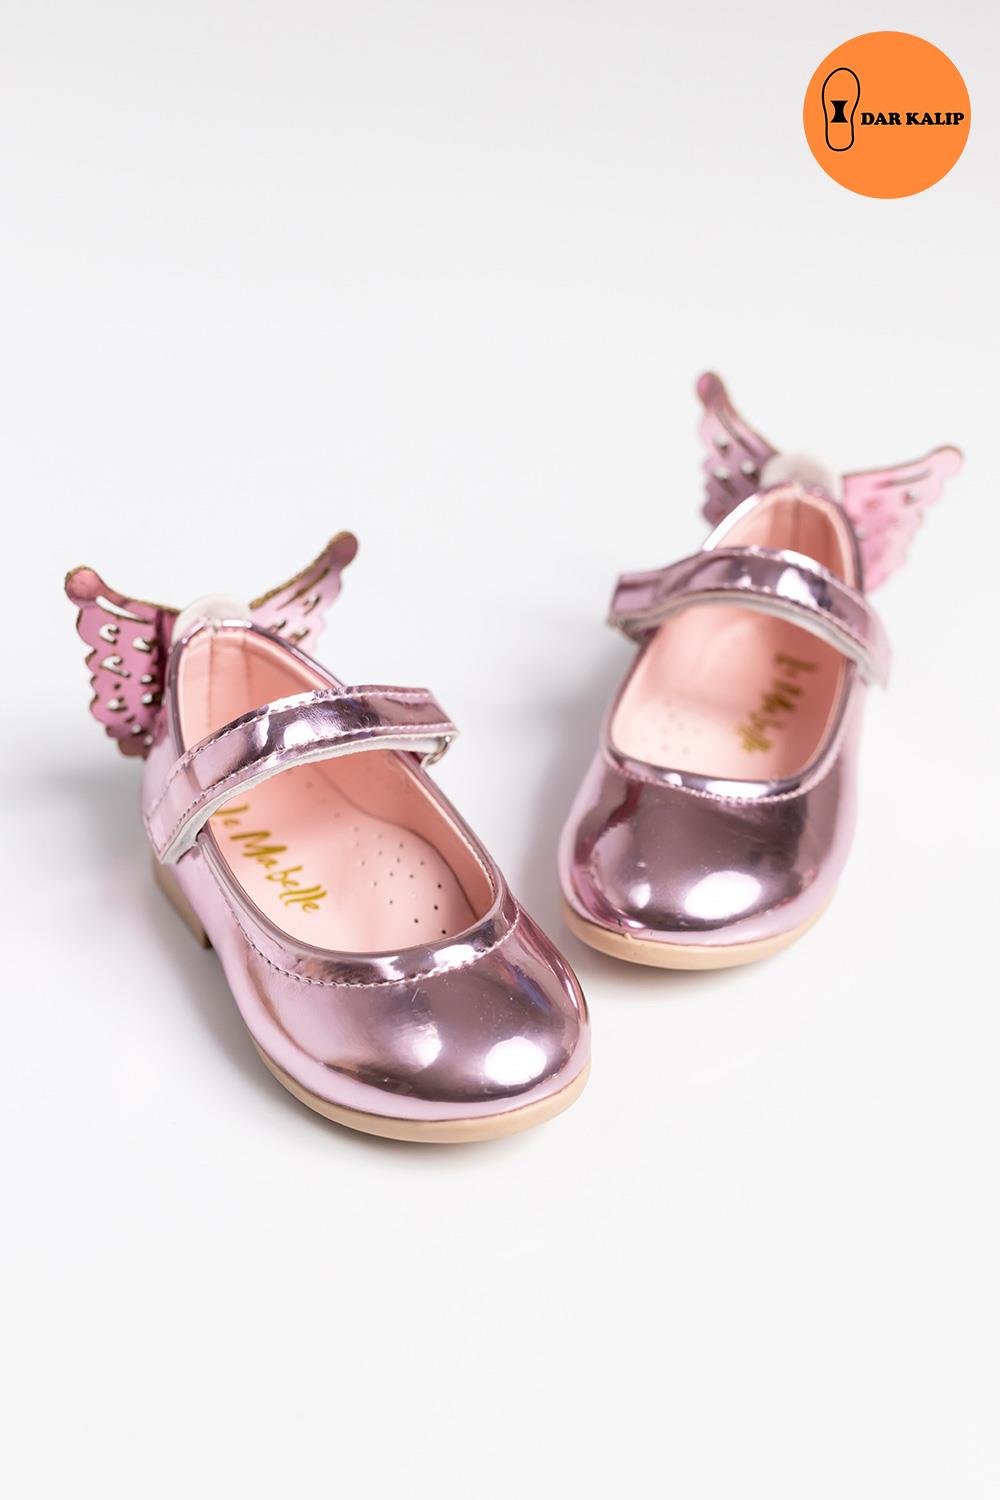 Pembe Topuğu Kelebekli Kız Çocuk AyakkabıLM915 | Le Mabelle